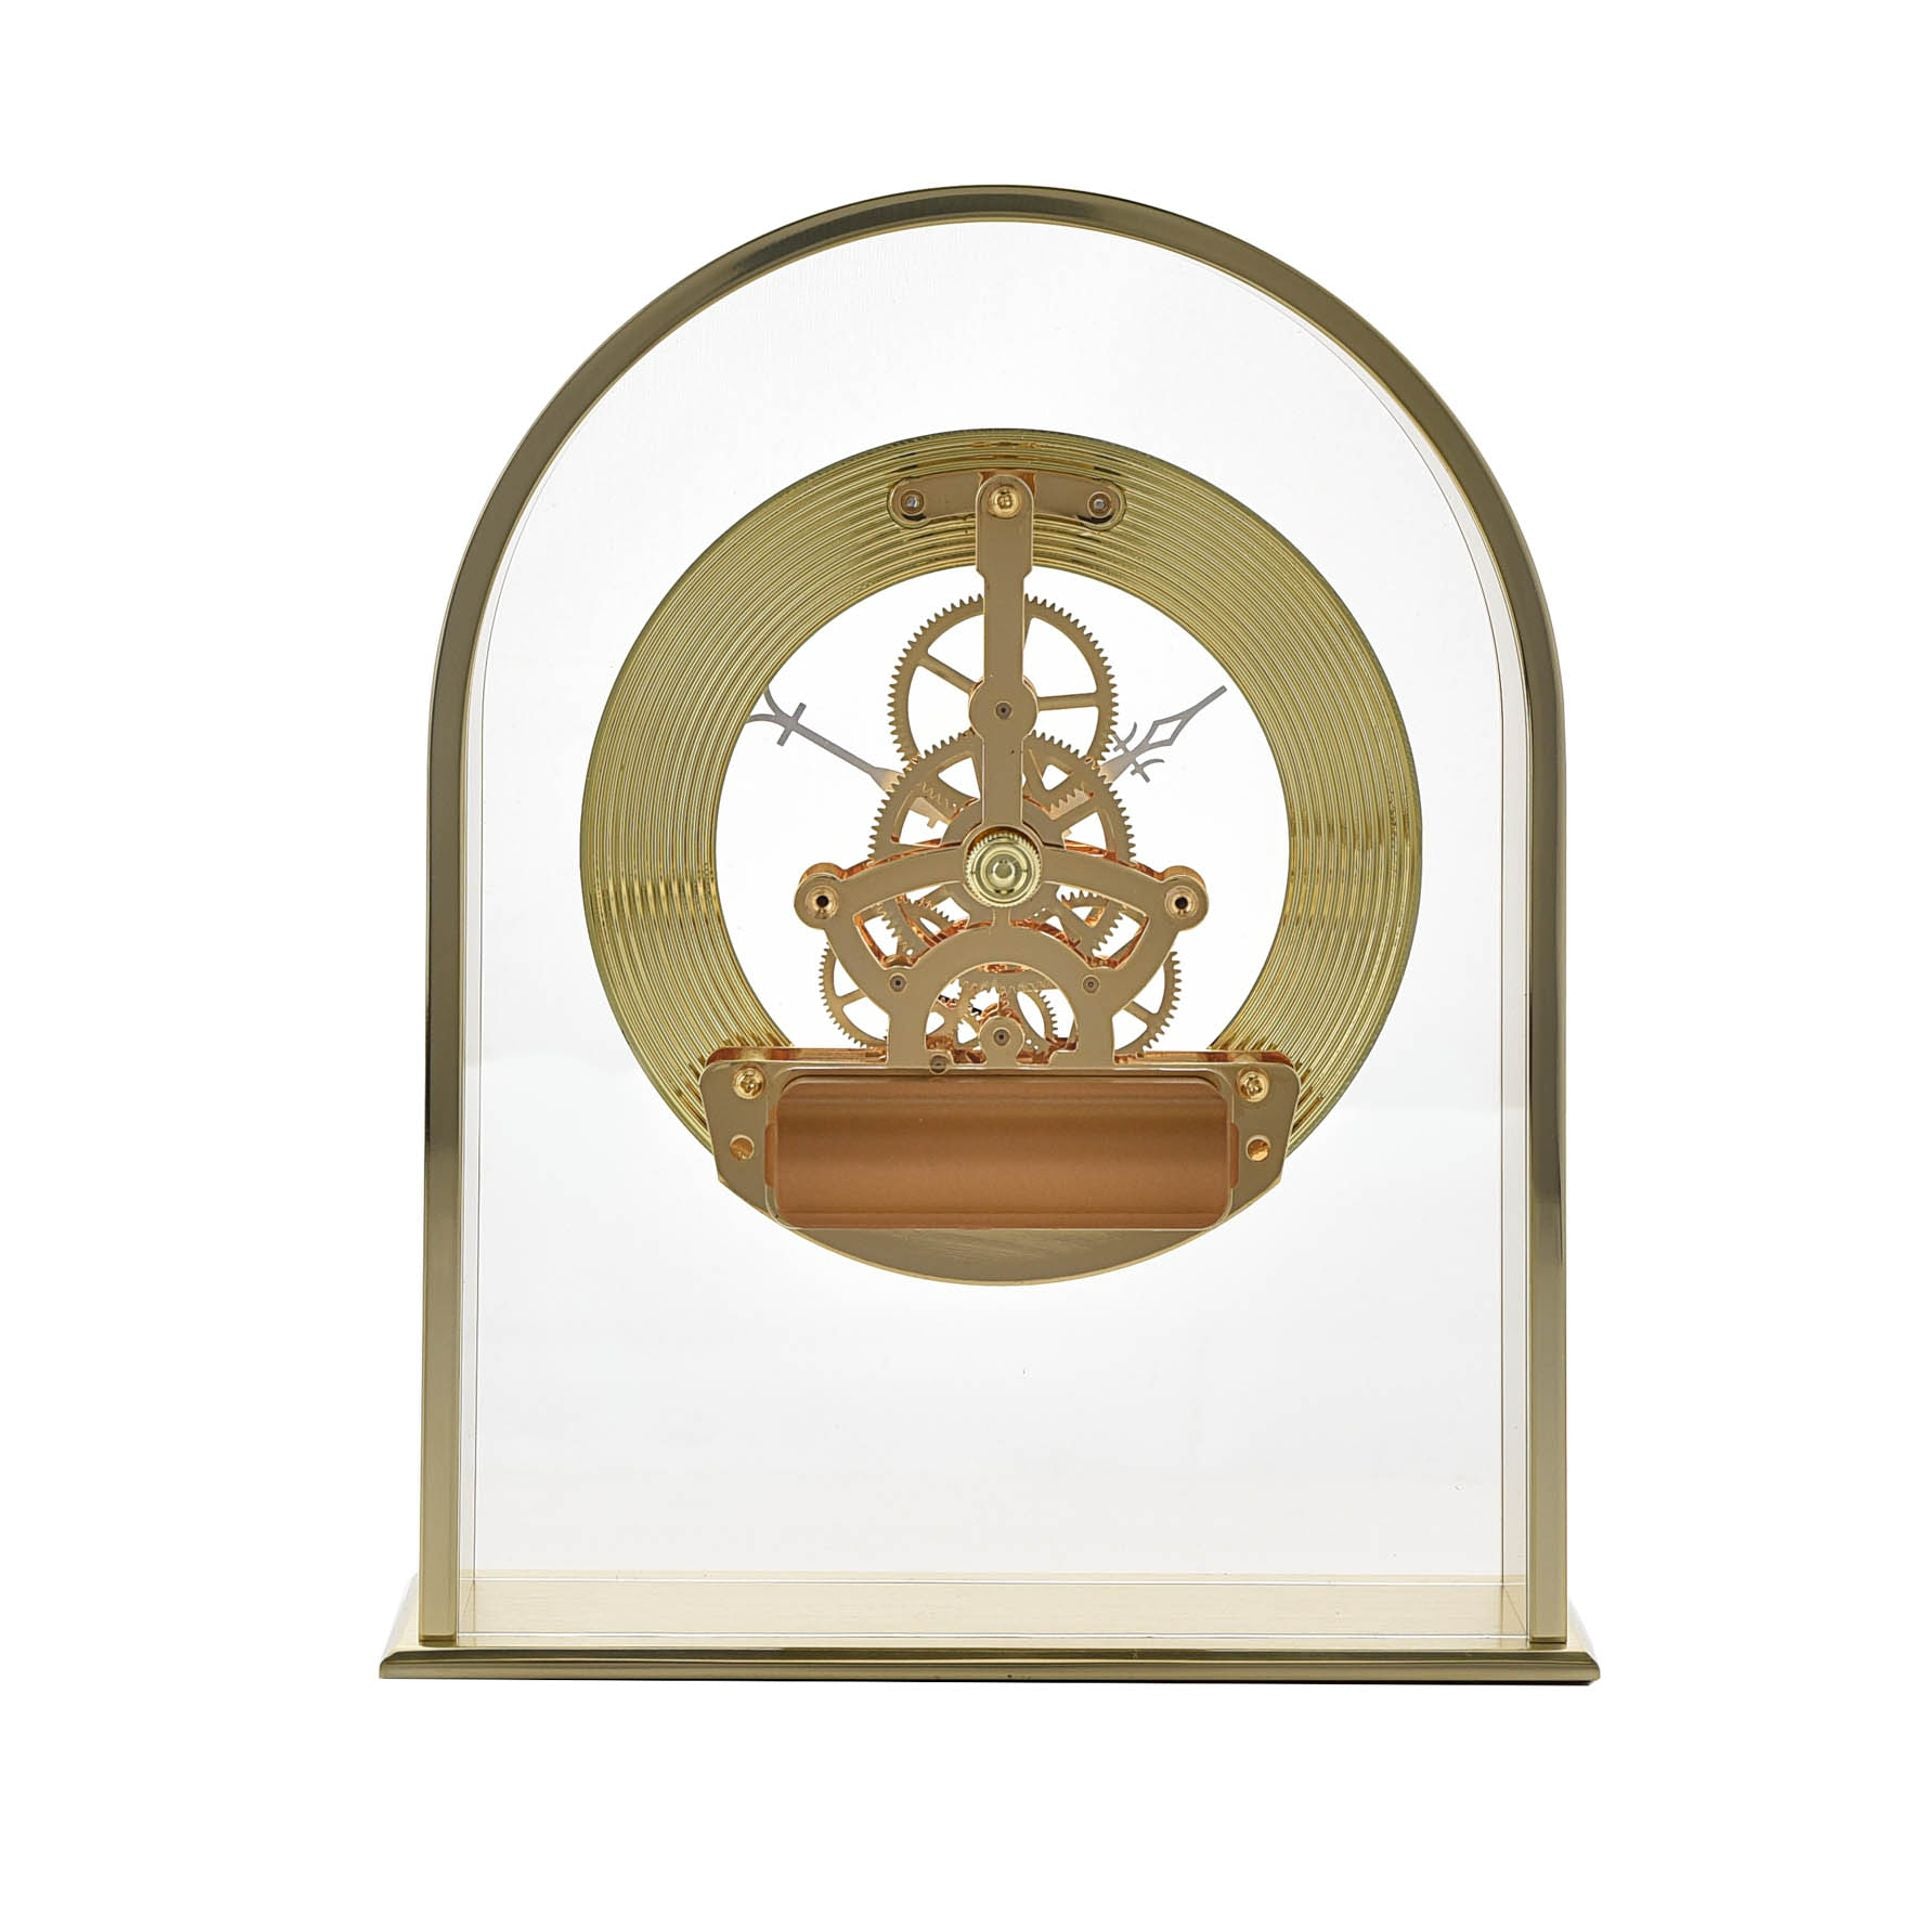 WM. Widdop Gold Arch Mantel Clock with Skeleton Movement